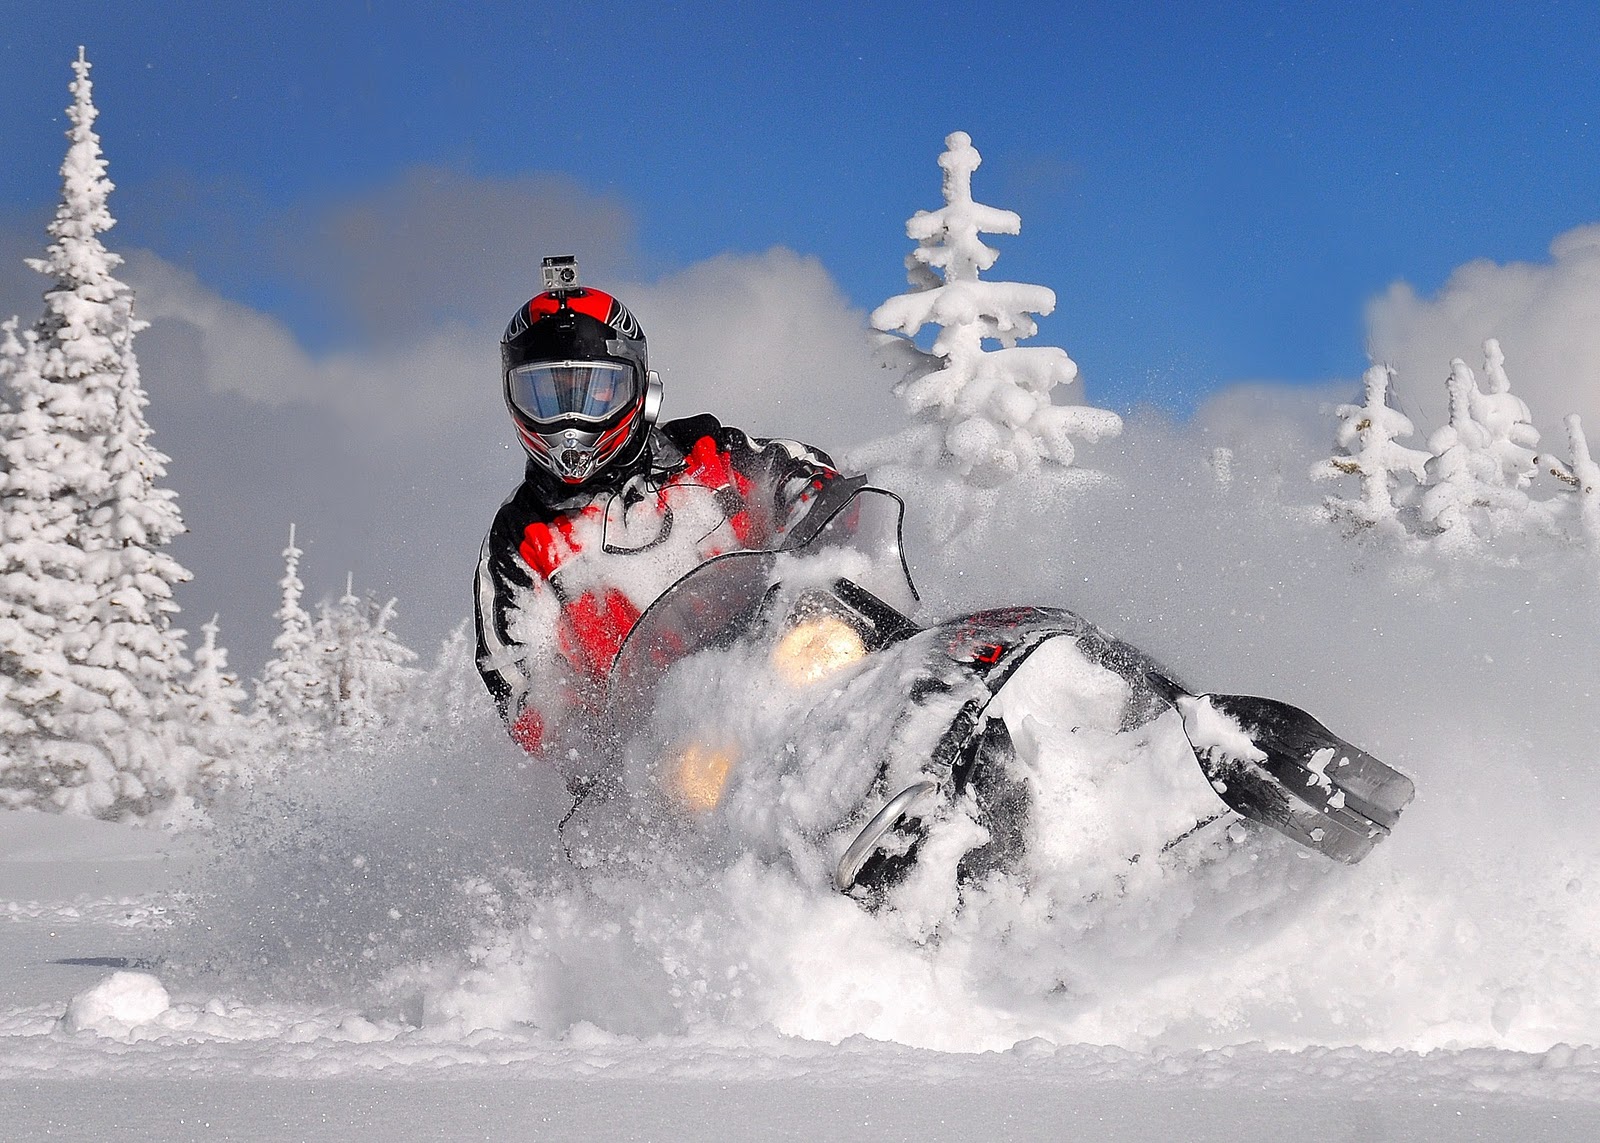 snowmobile wallpaper,snowmobile,snow,winter sport,winter,vehicle